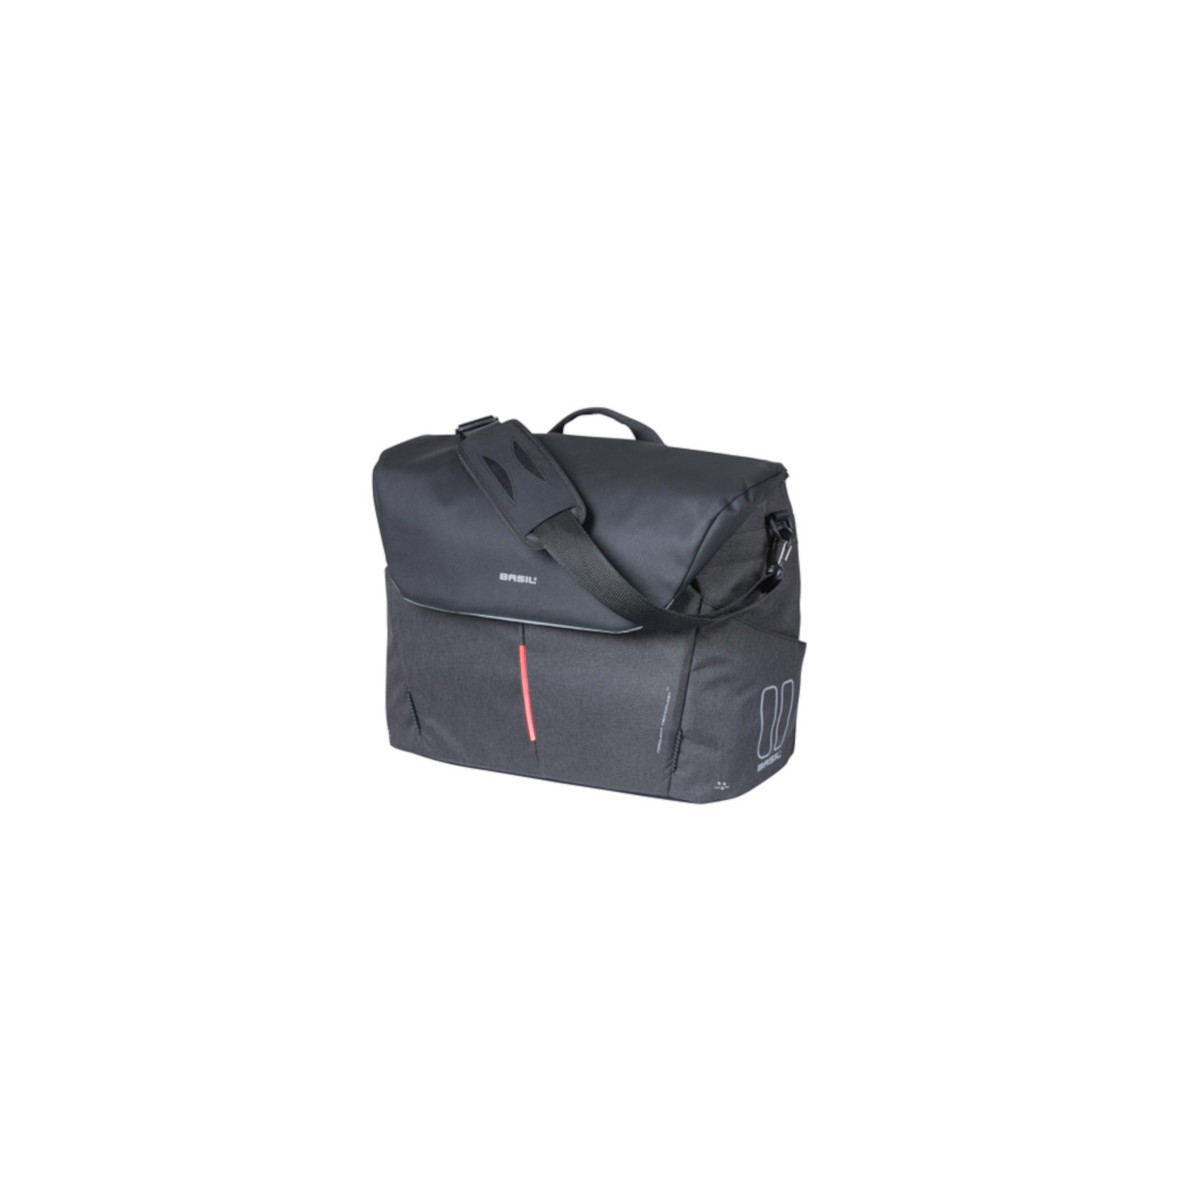 B-Safe Commuter officebag Nordlicht, noir graphite